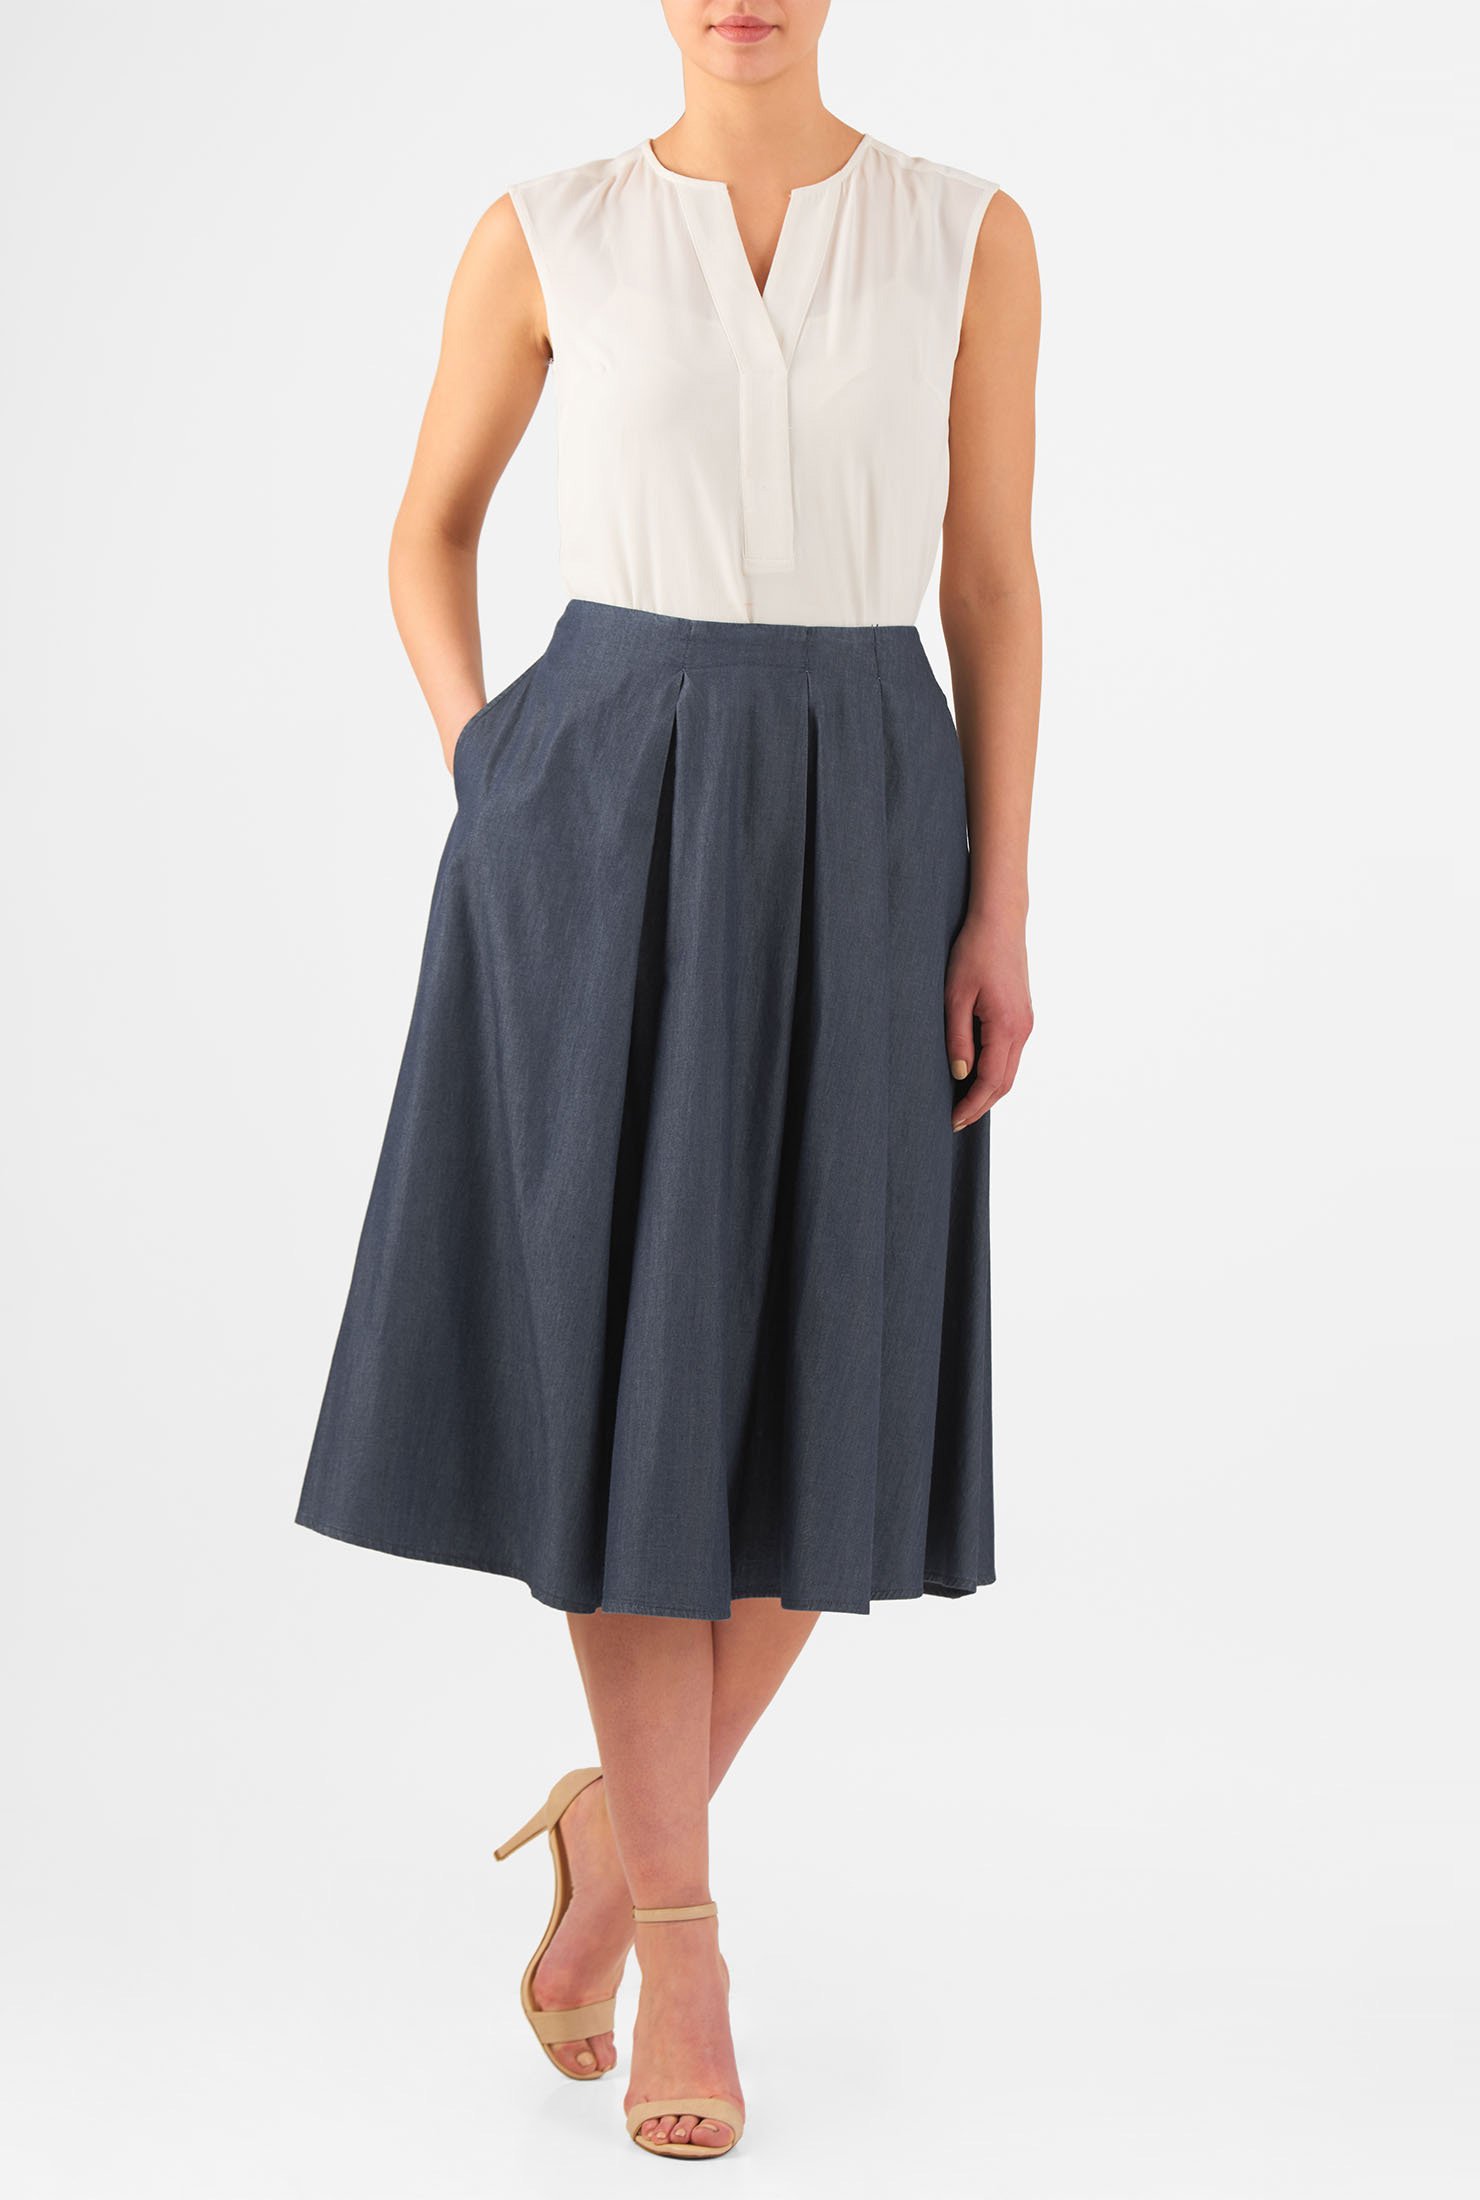 Shop Box pleat cotton chambray full skirt | eShakti